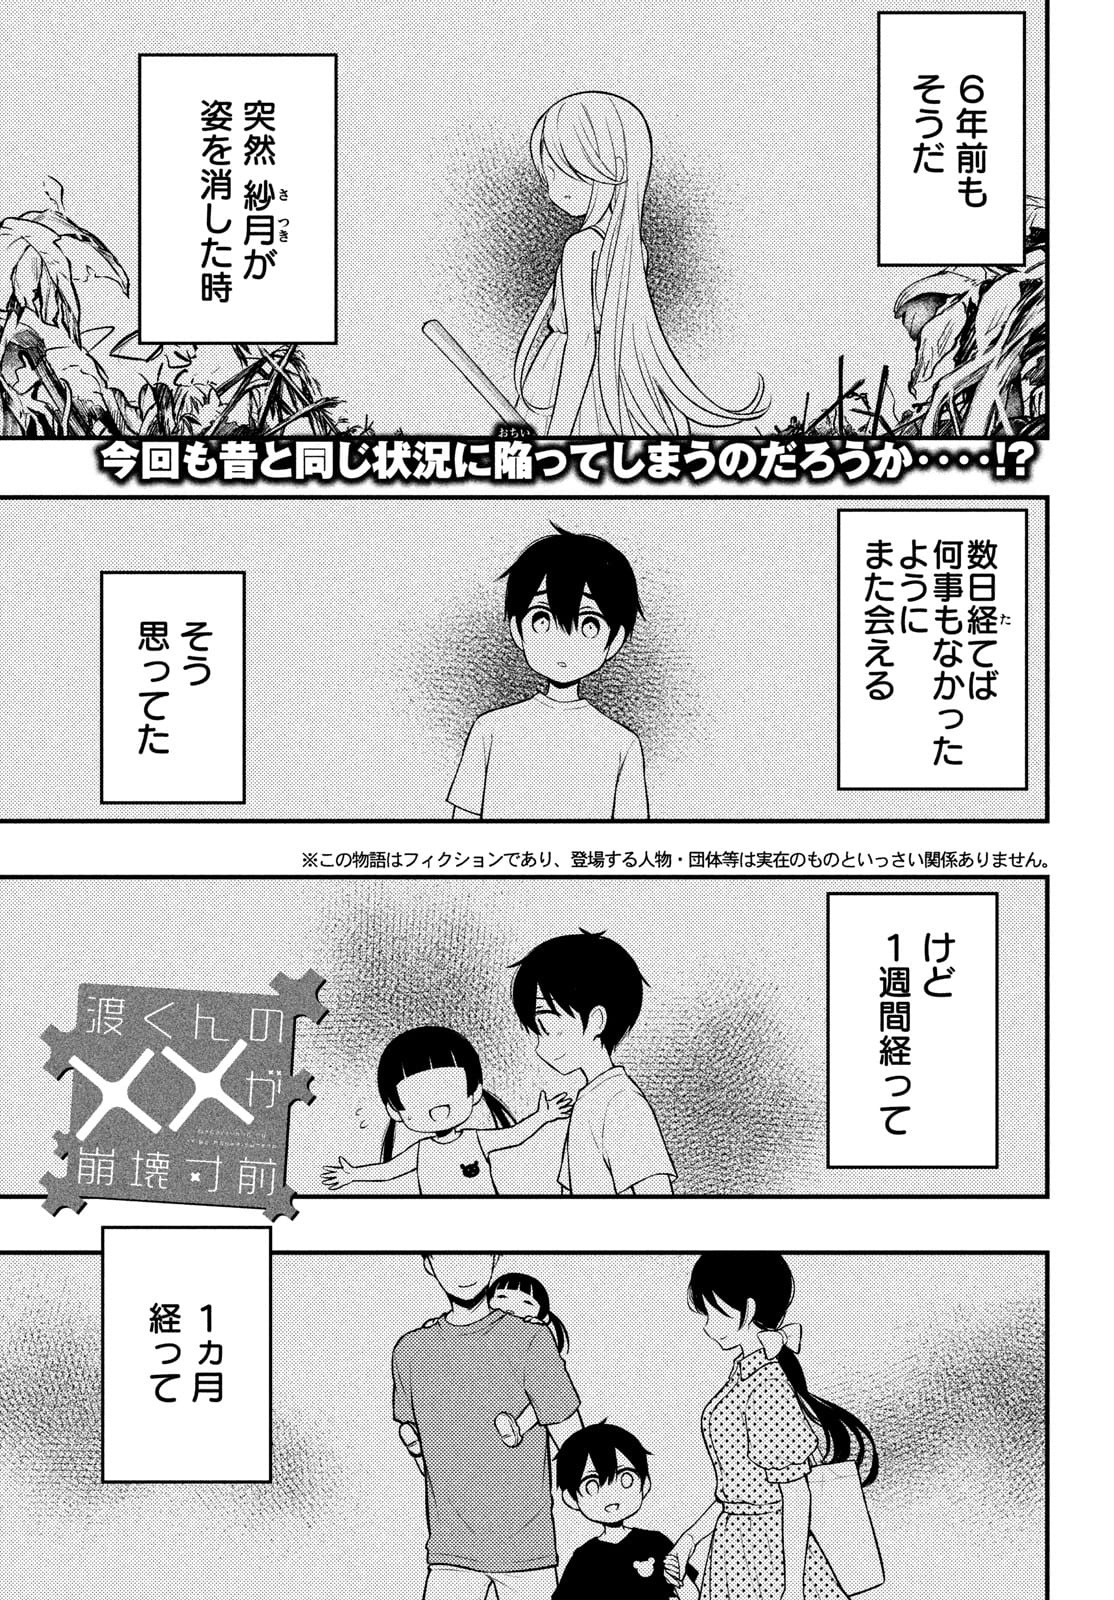 Watari-kun no xx ga Houkai Sunzen - Chapter 68 - Page 1